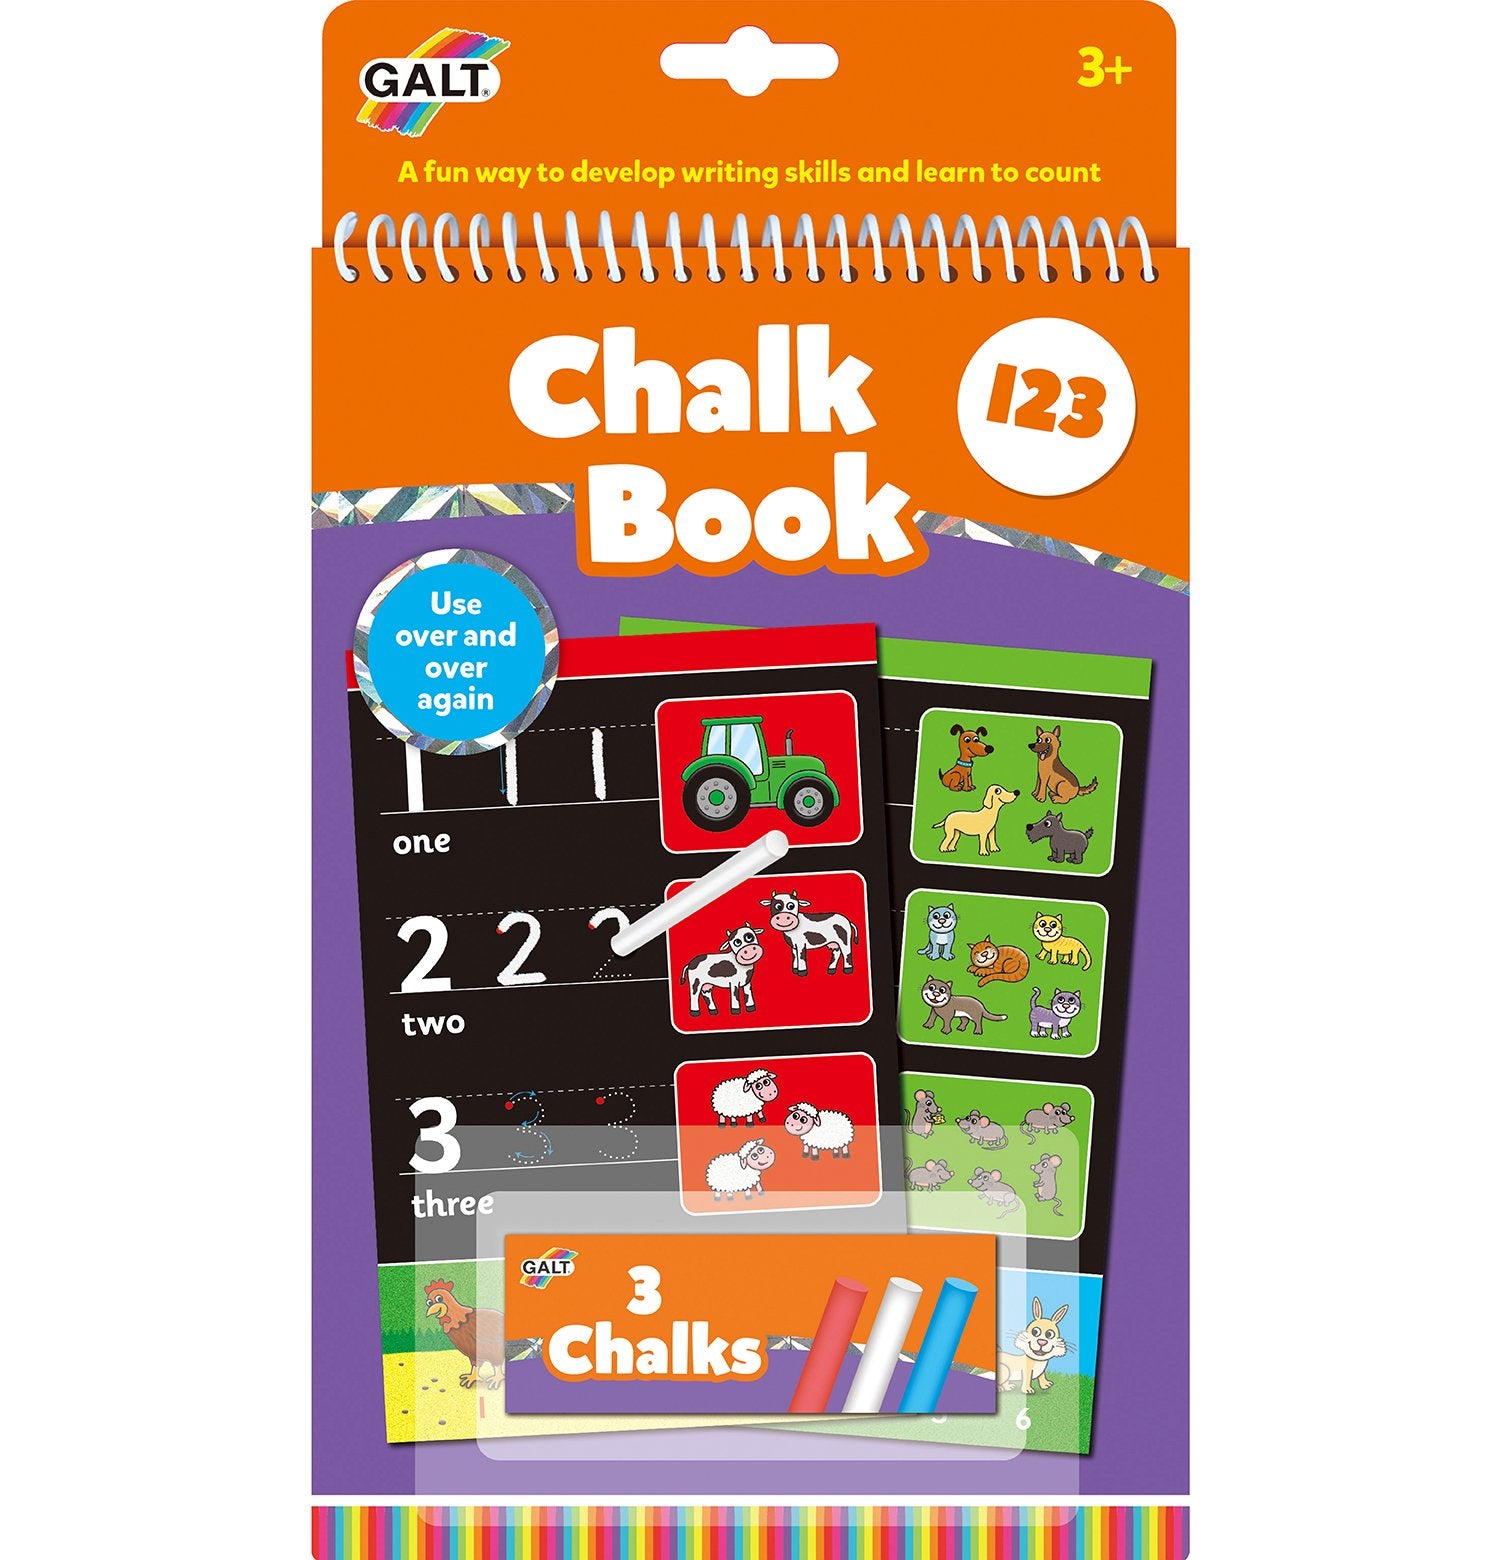 Chalk Book 123 - Galt